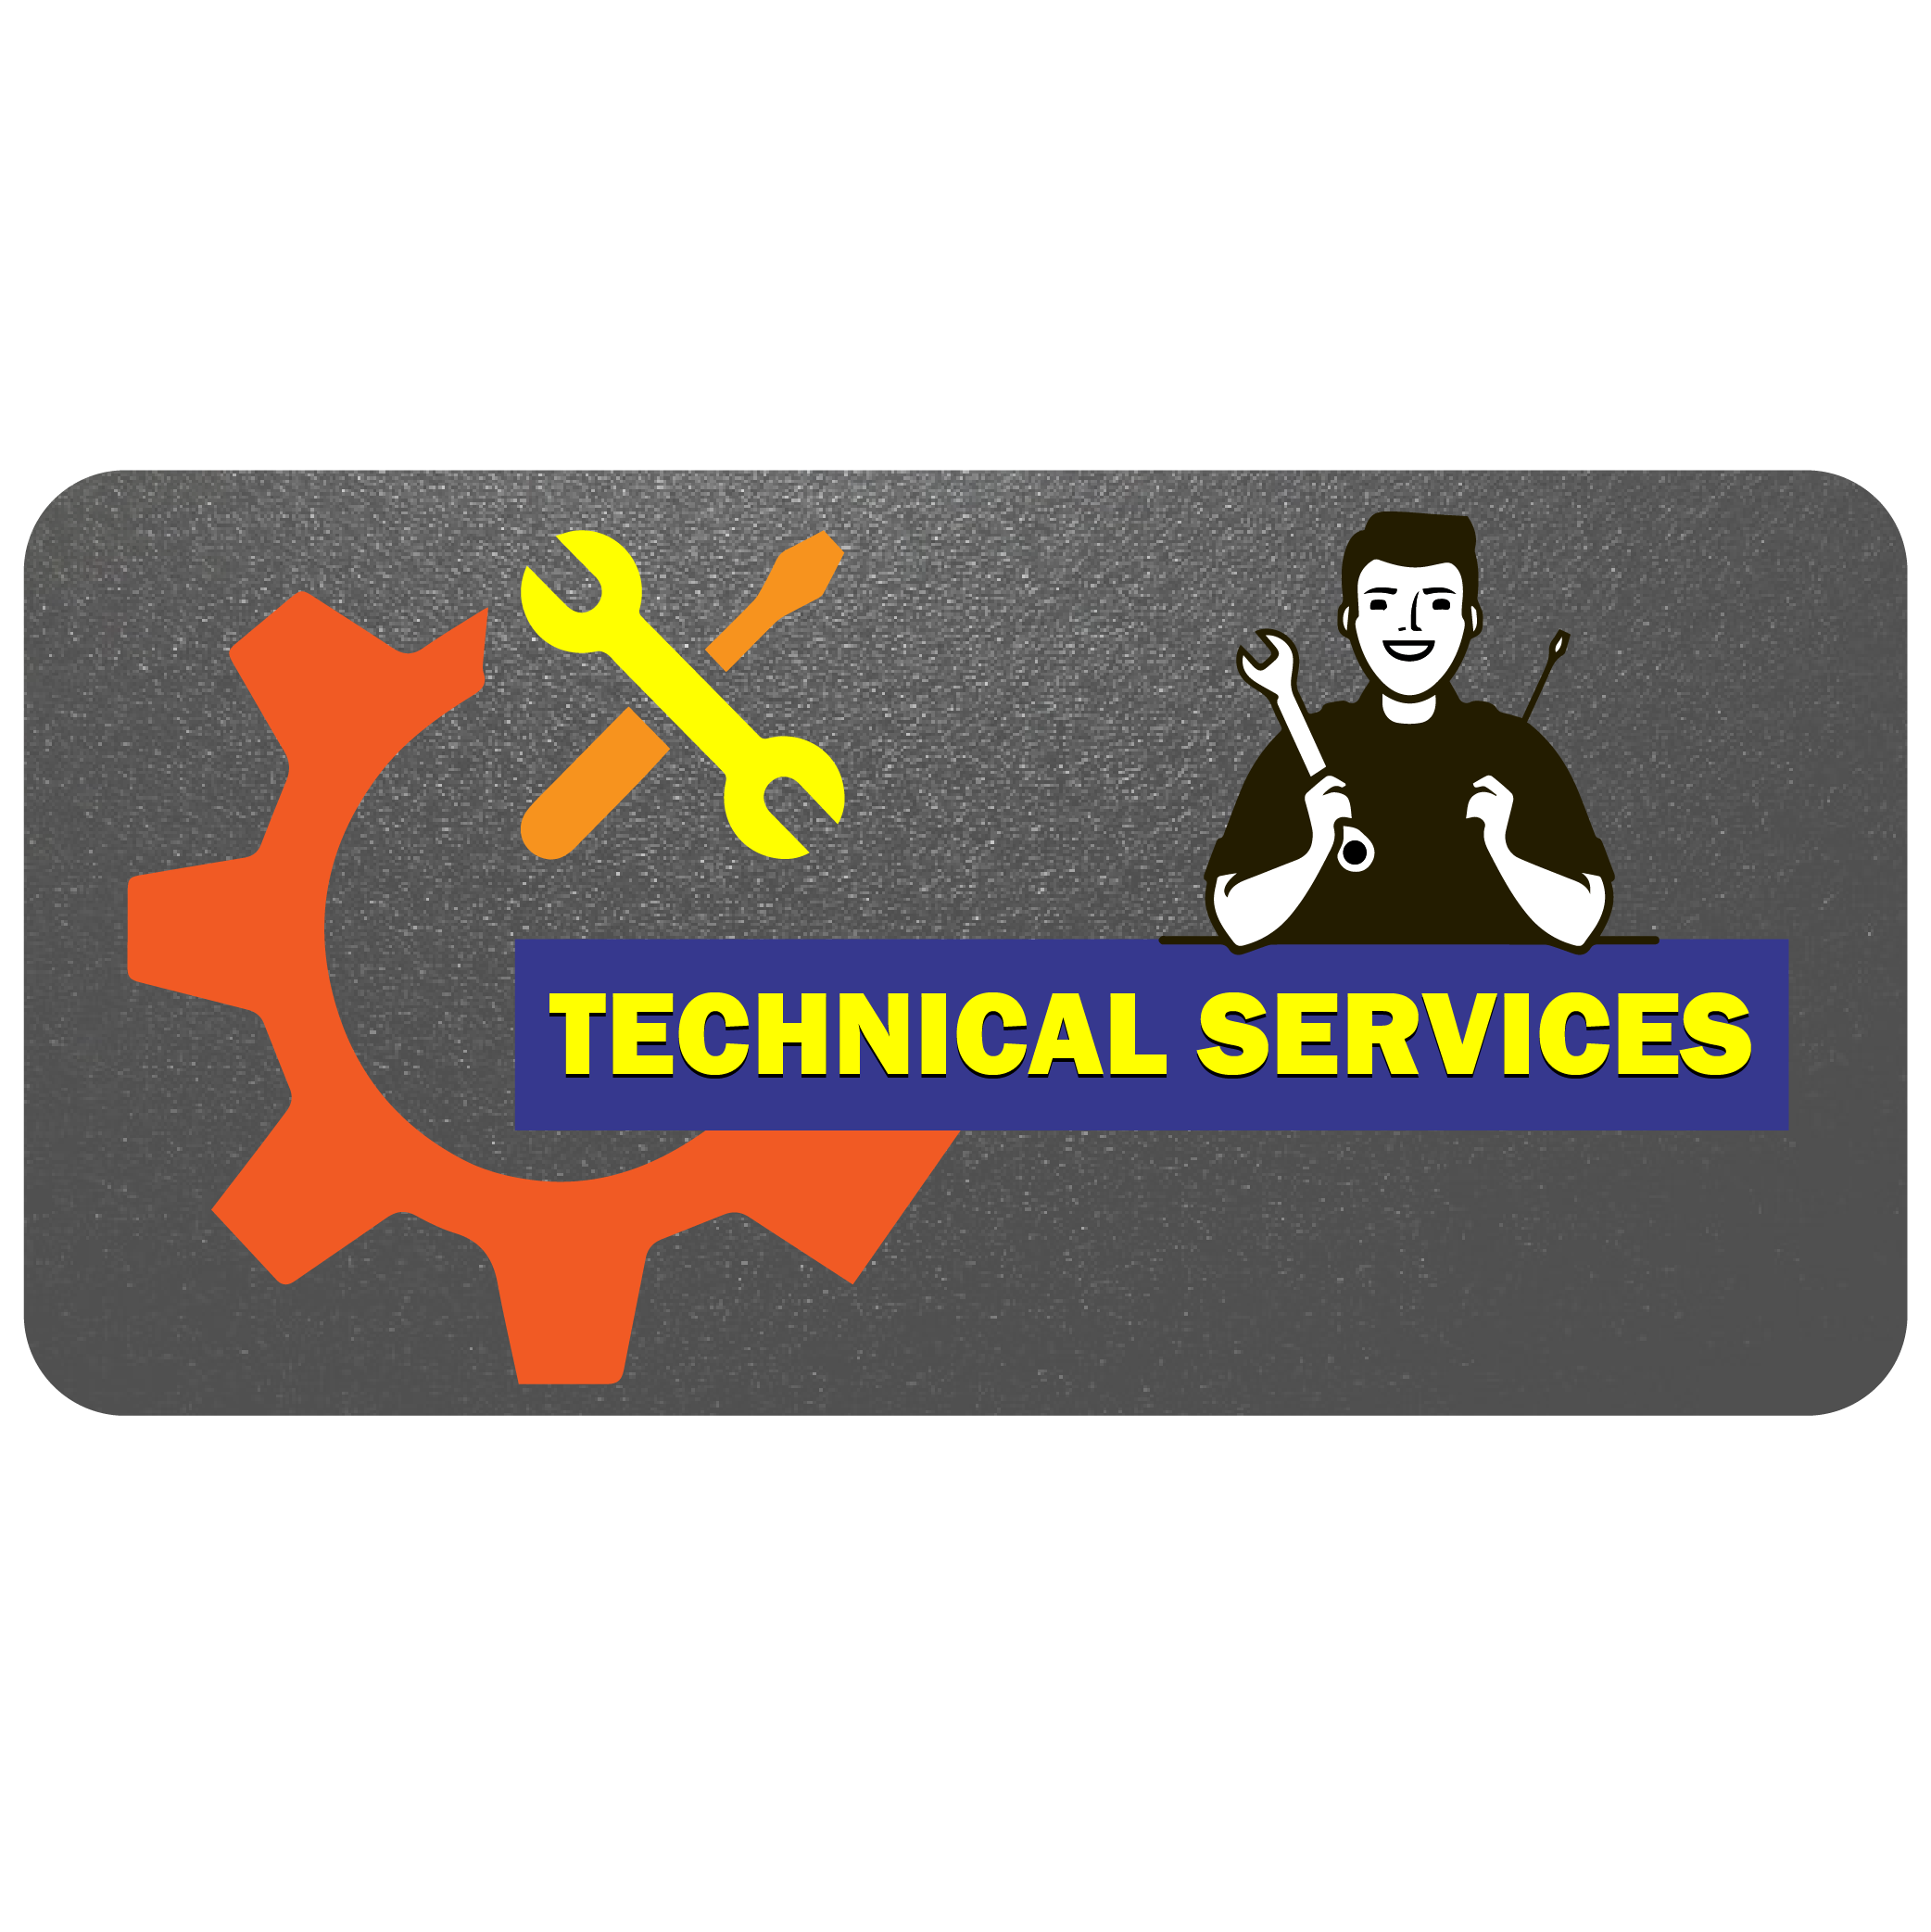 TECHNICAL SERVICES COMPANY IN DUBAI logo